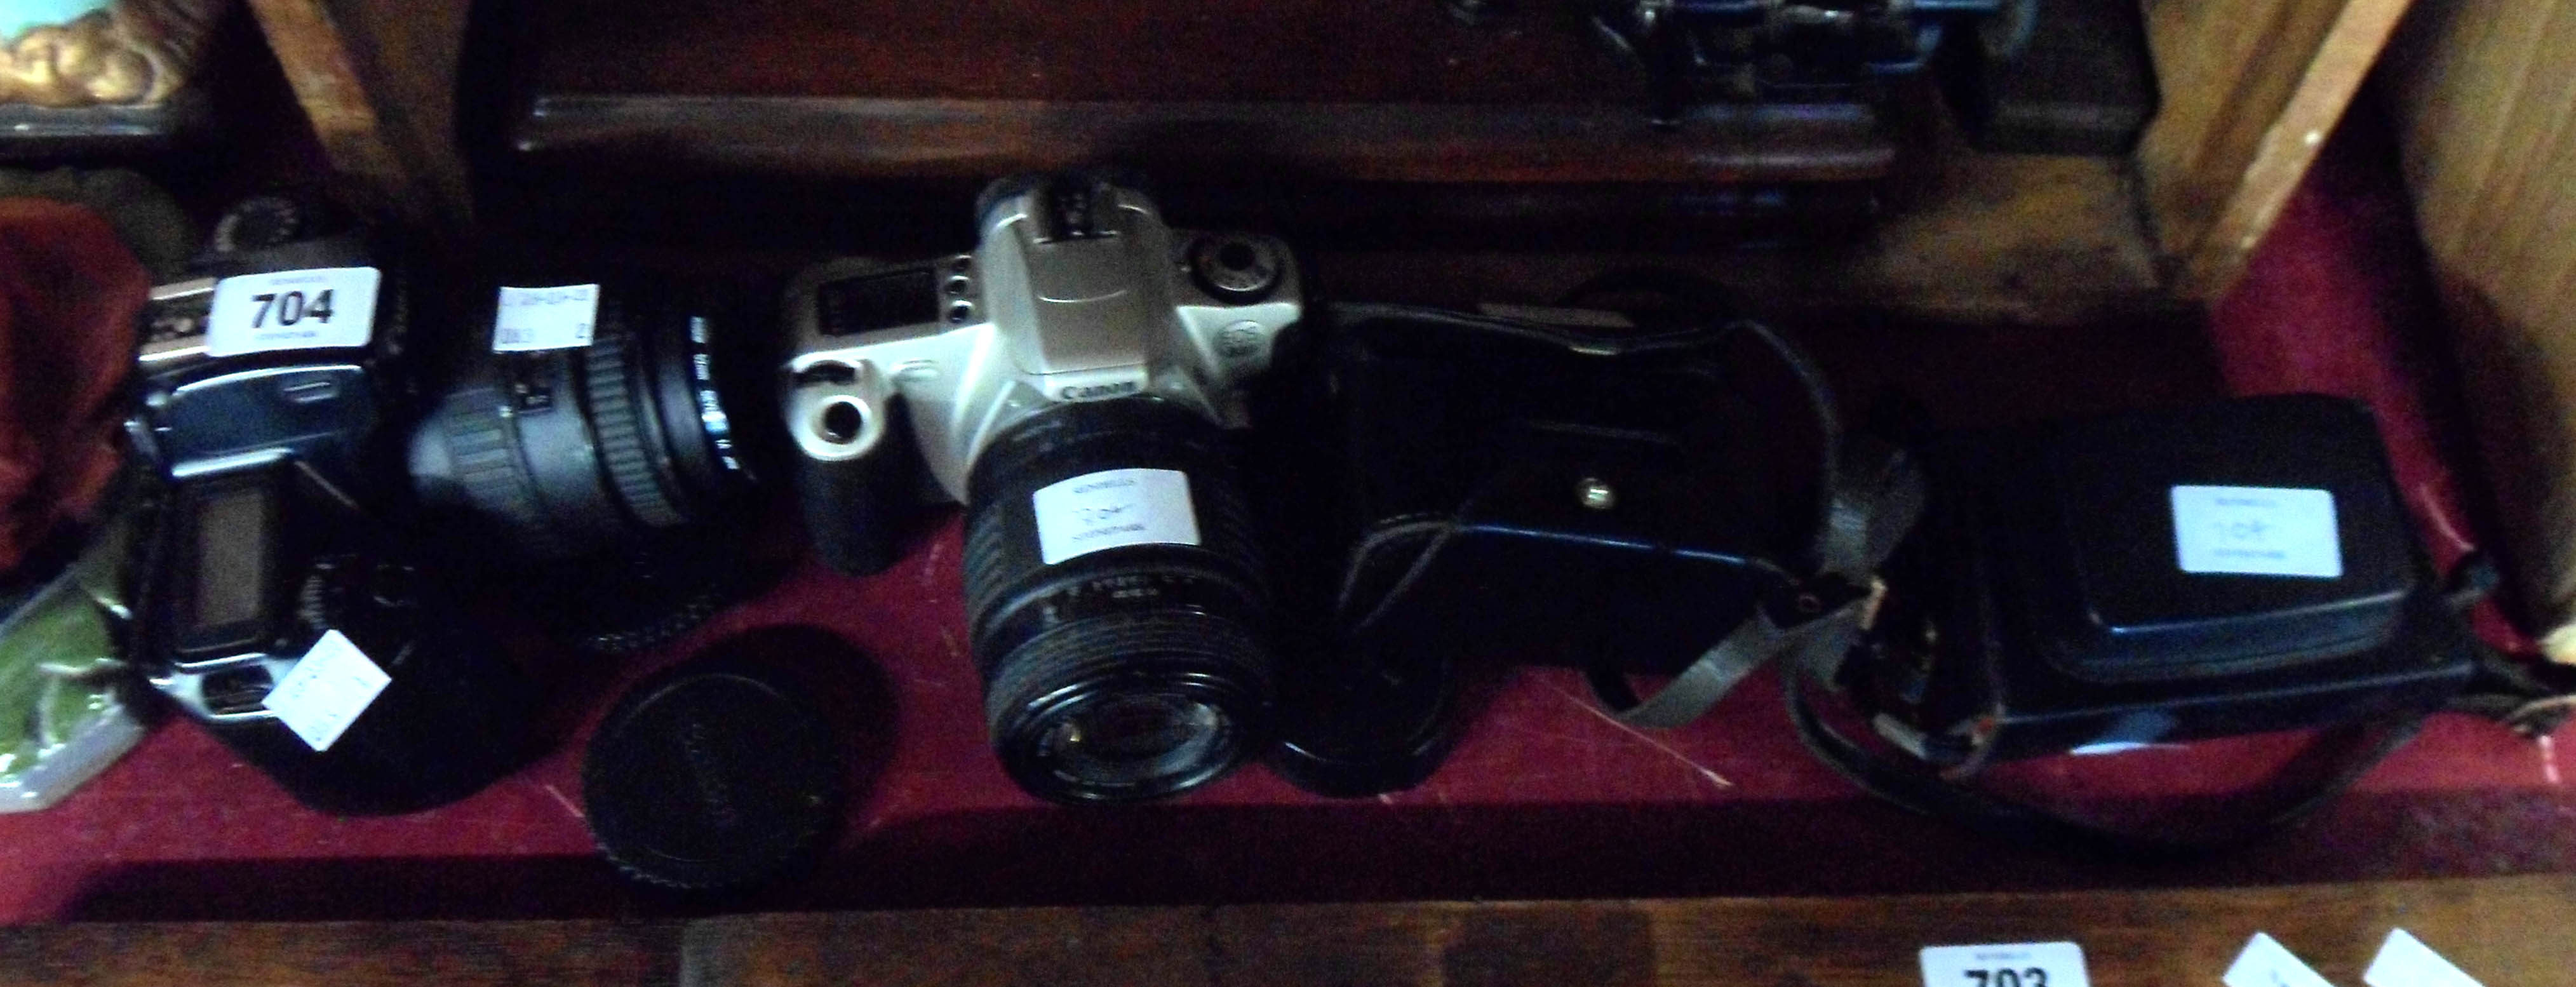 A Canon EOS 100 35mm camera, a Canon EOS 700 35mm camera - sold with two Kodak cameras